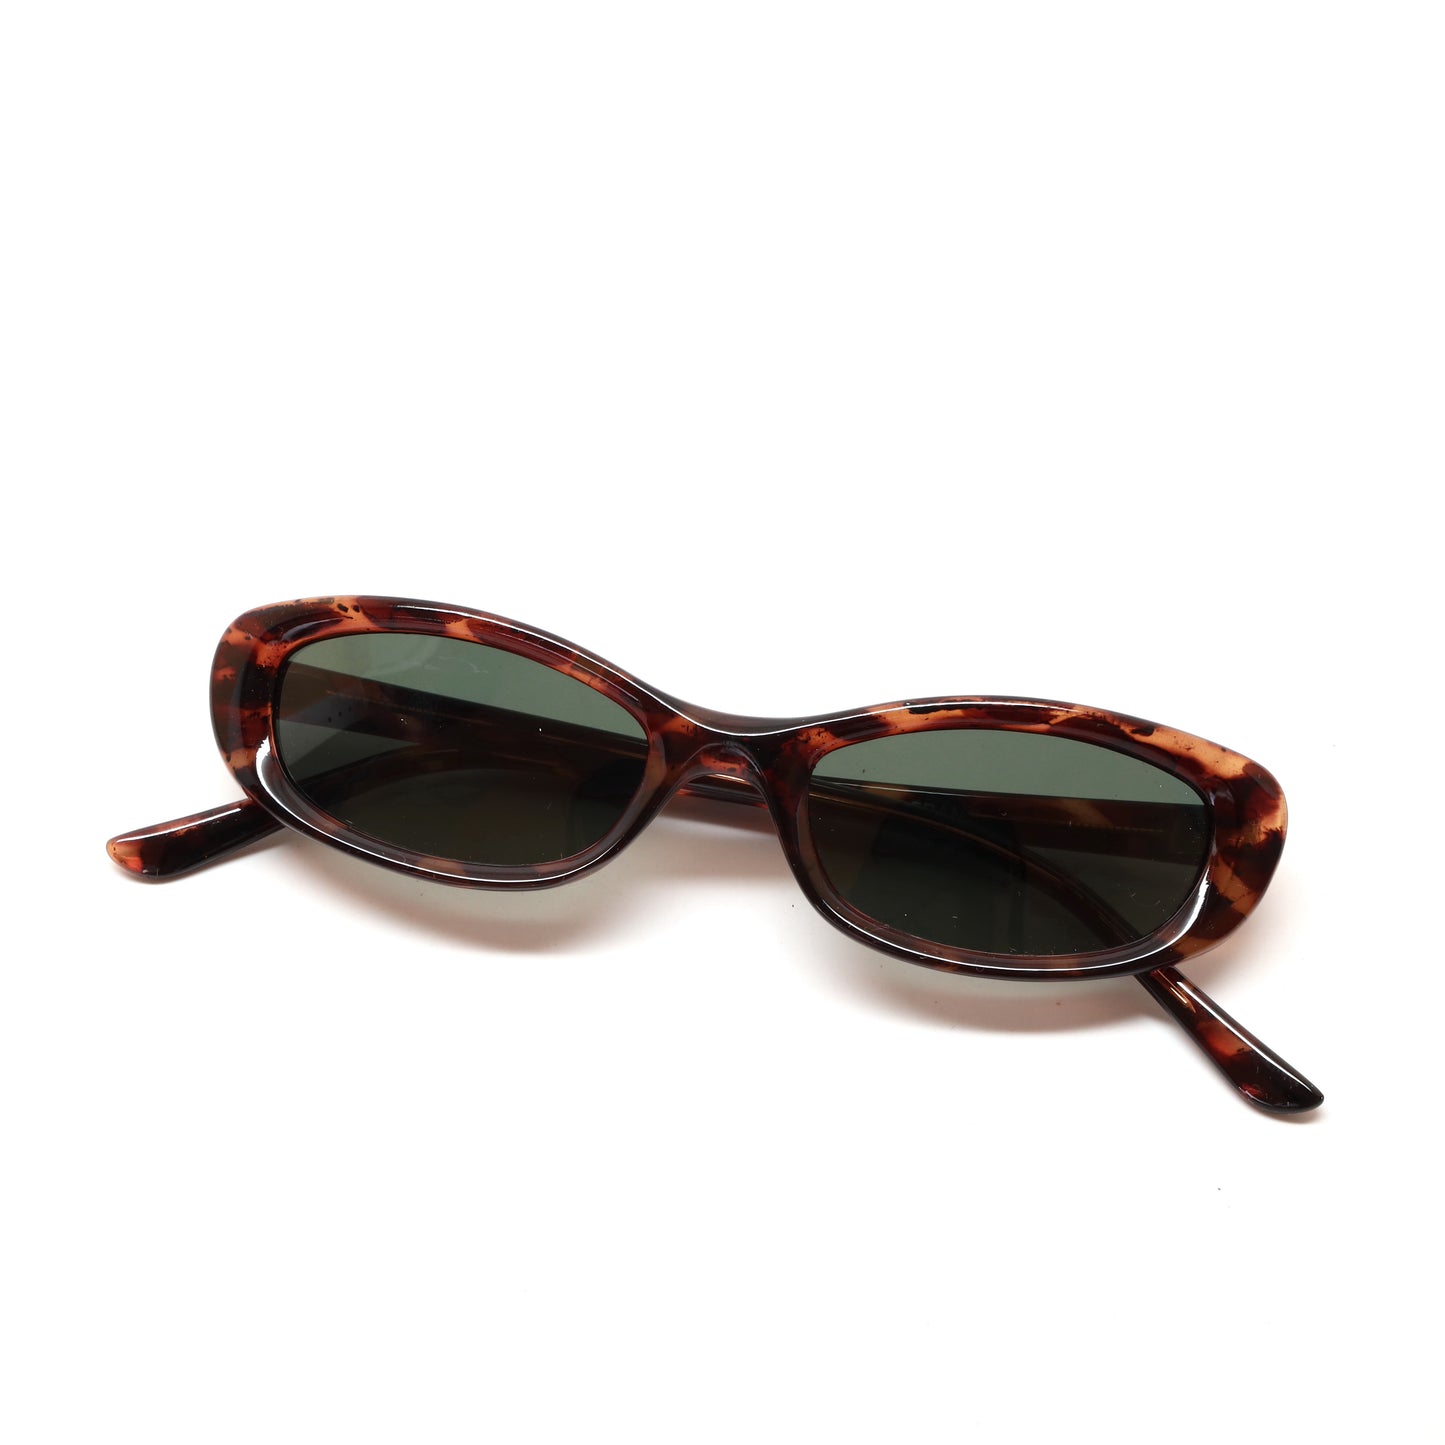 Vintage 90s Small Size Slim Narrow Rectangle Frame Sunglasses - Tortoise